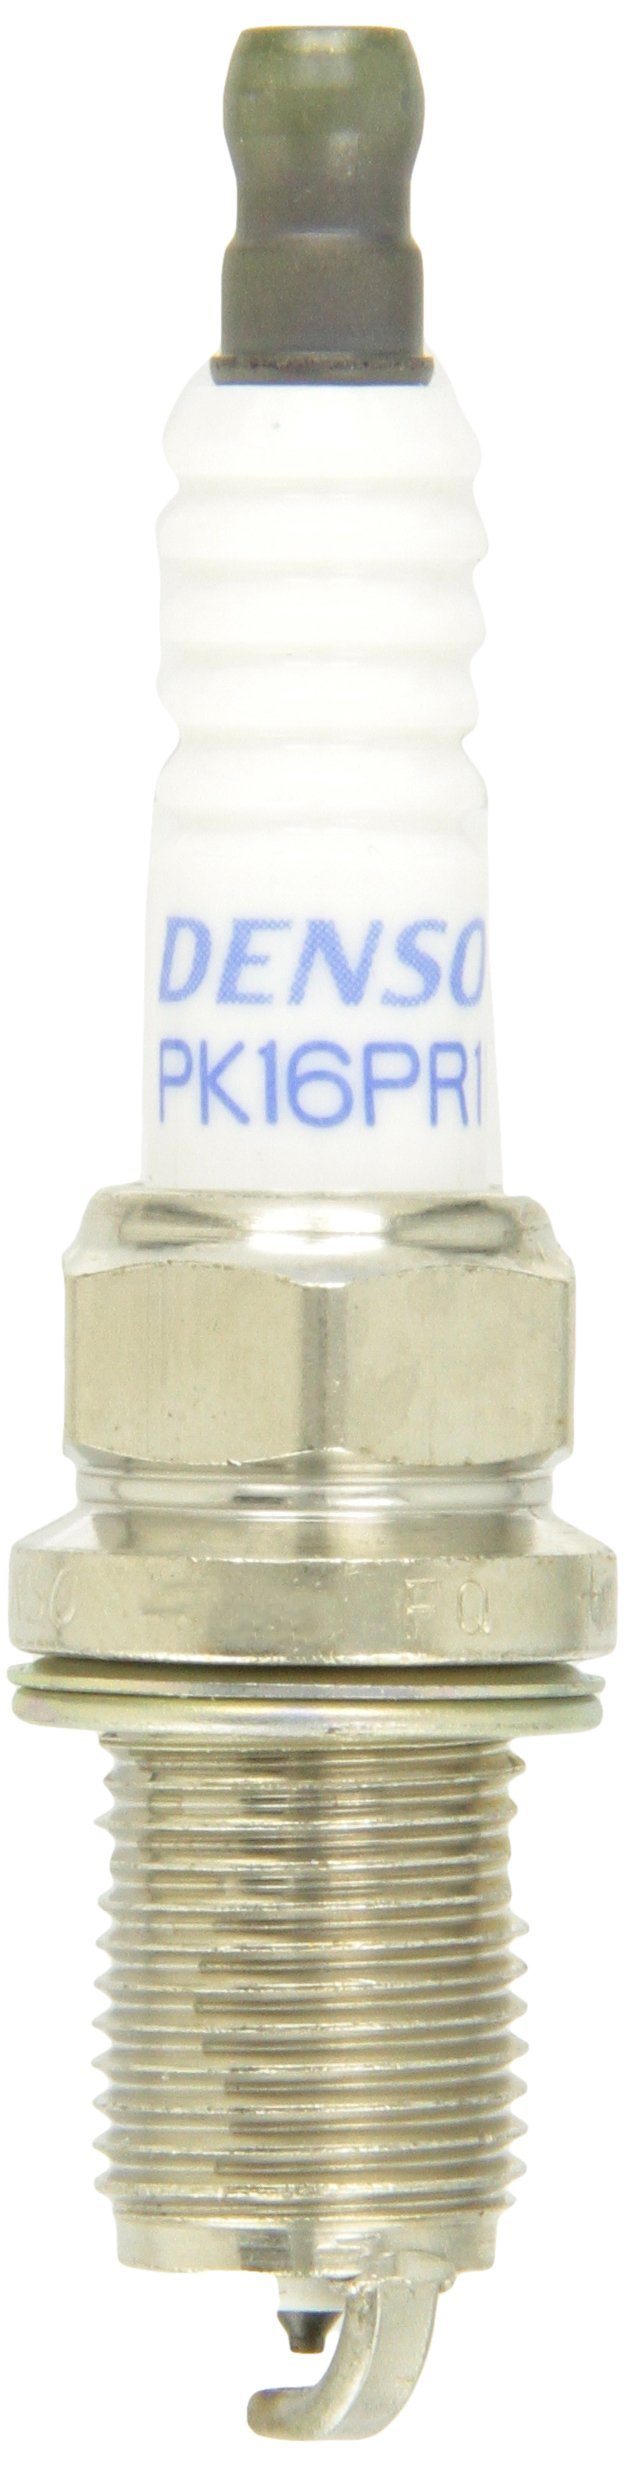 Denso (3264) PK16PR11 Double Platinum Spark Plug, Pack of 1 - LeoForward Australia